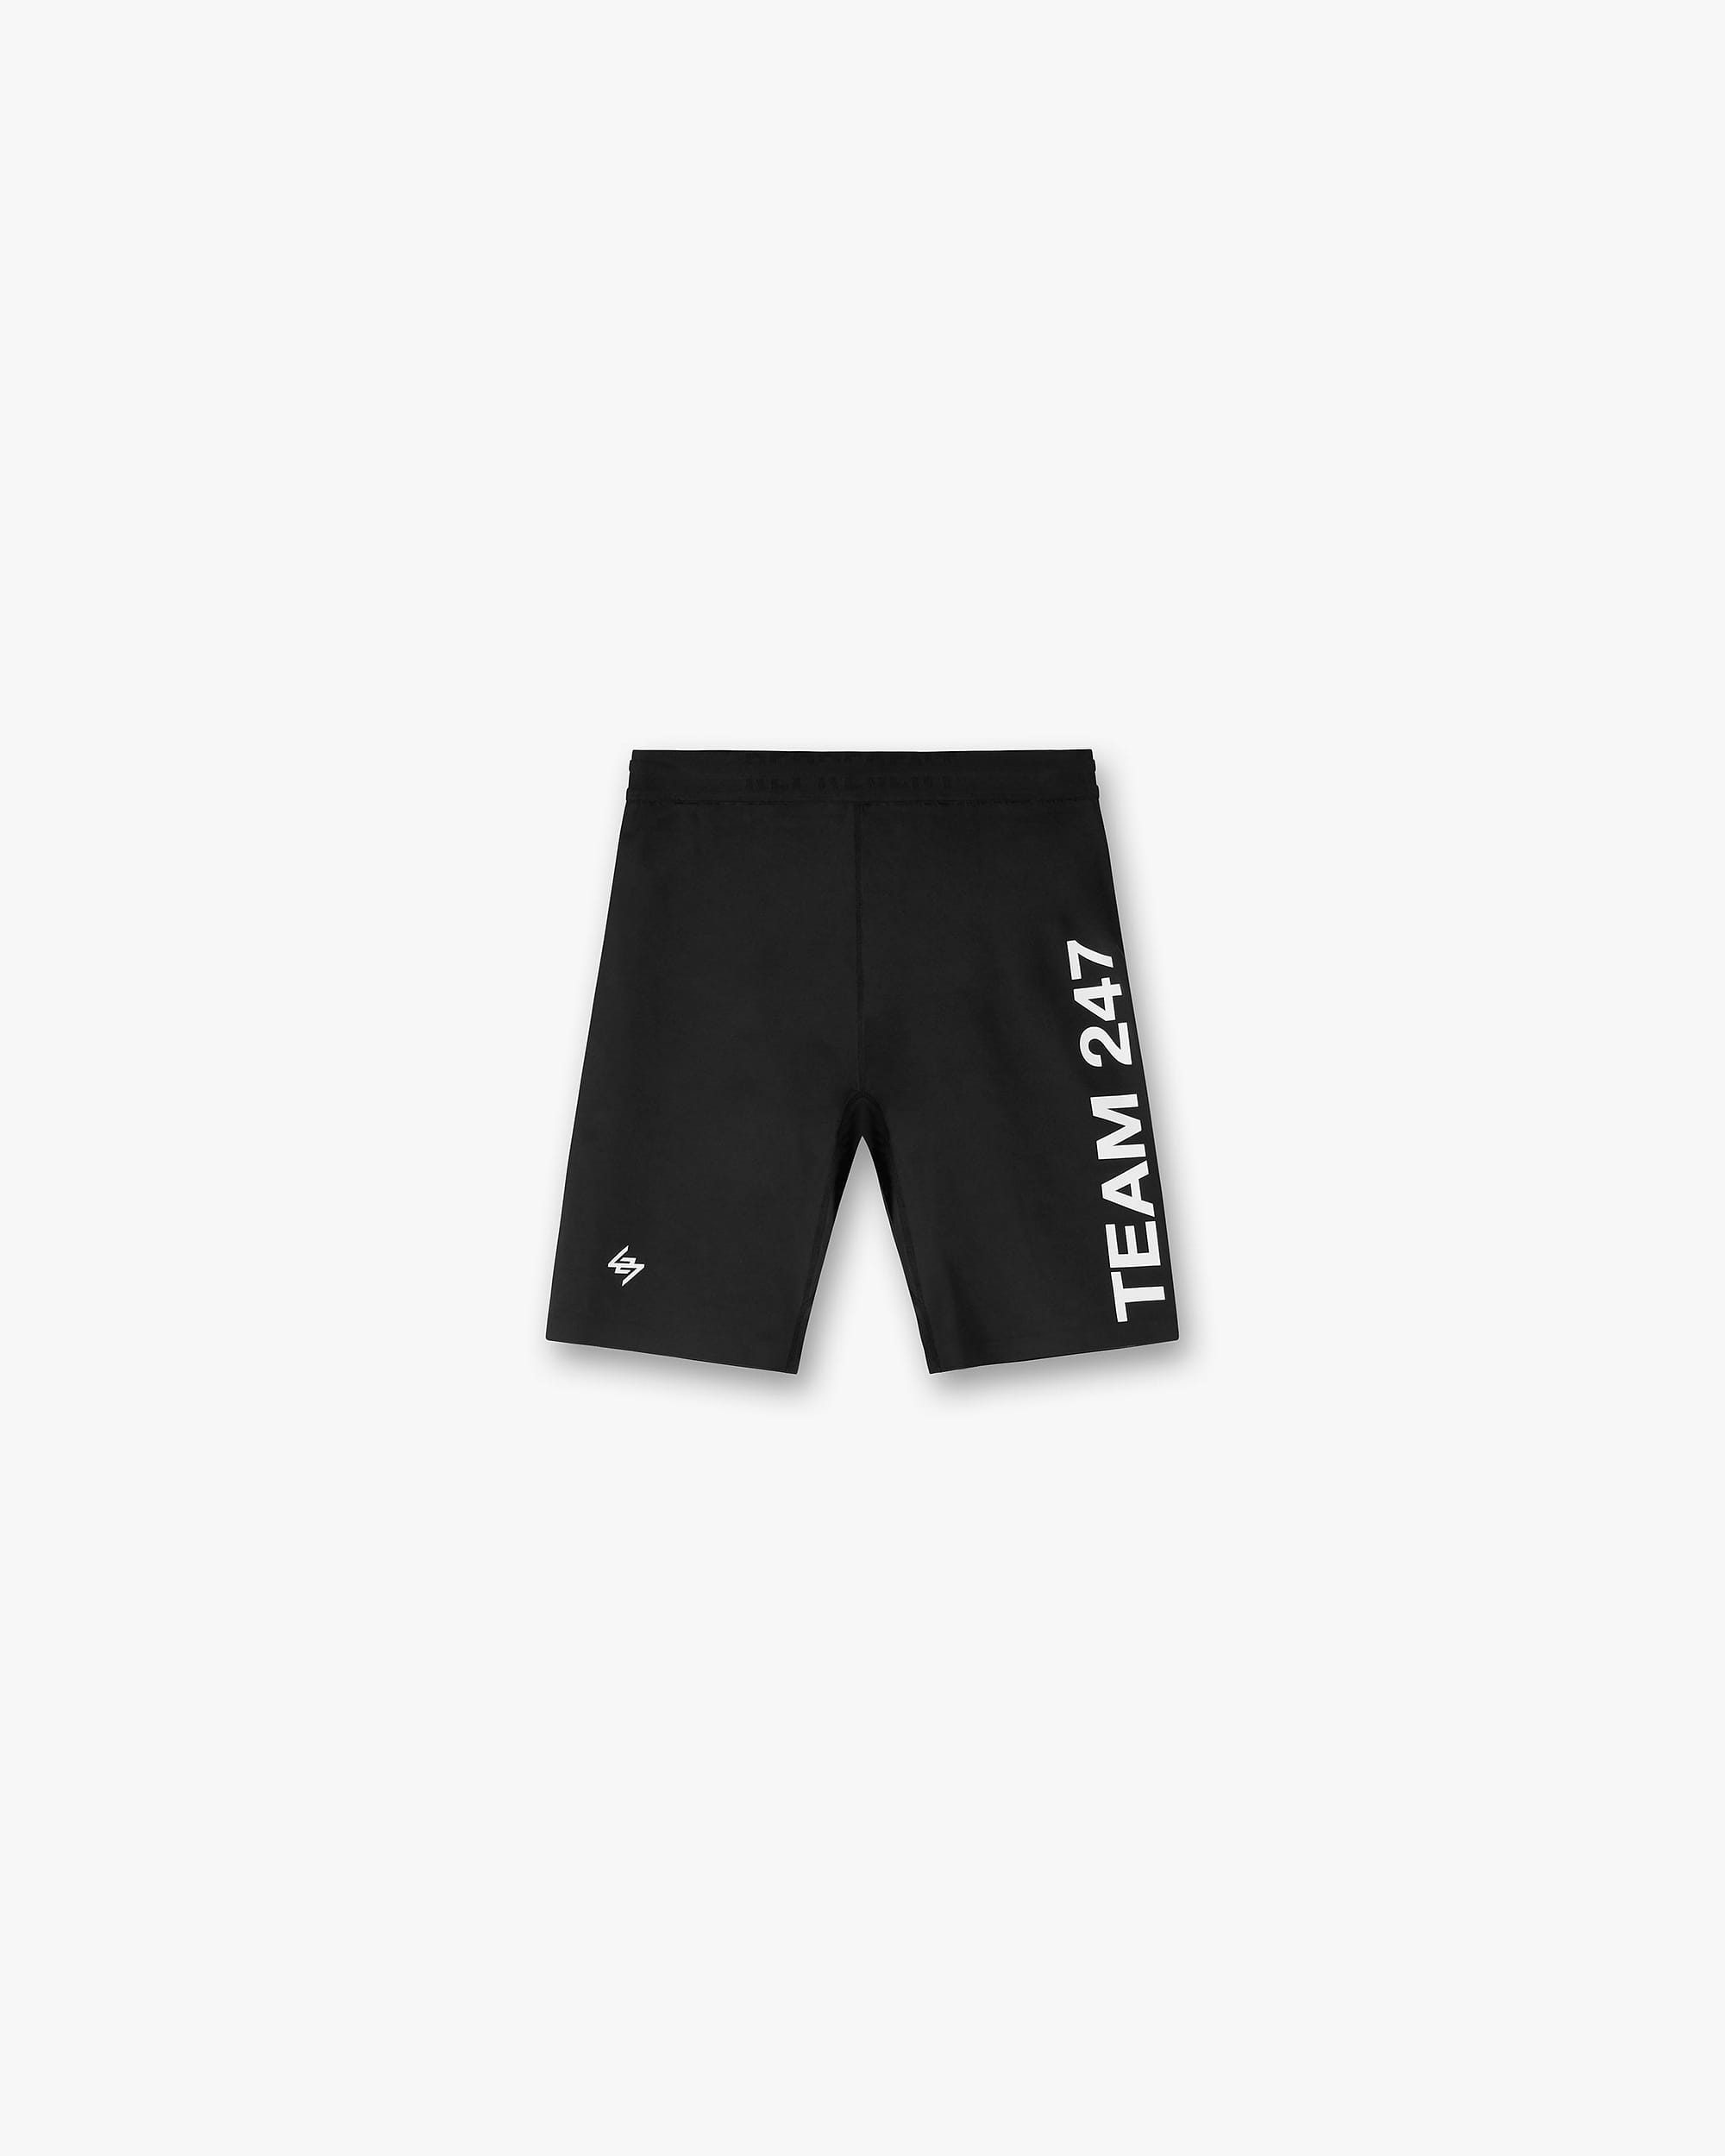 Team 247 Half Tight | Black Shorts 247 | Represent Clo